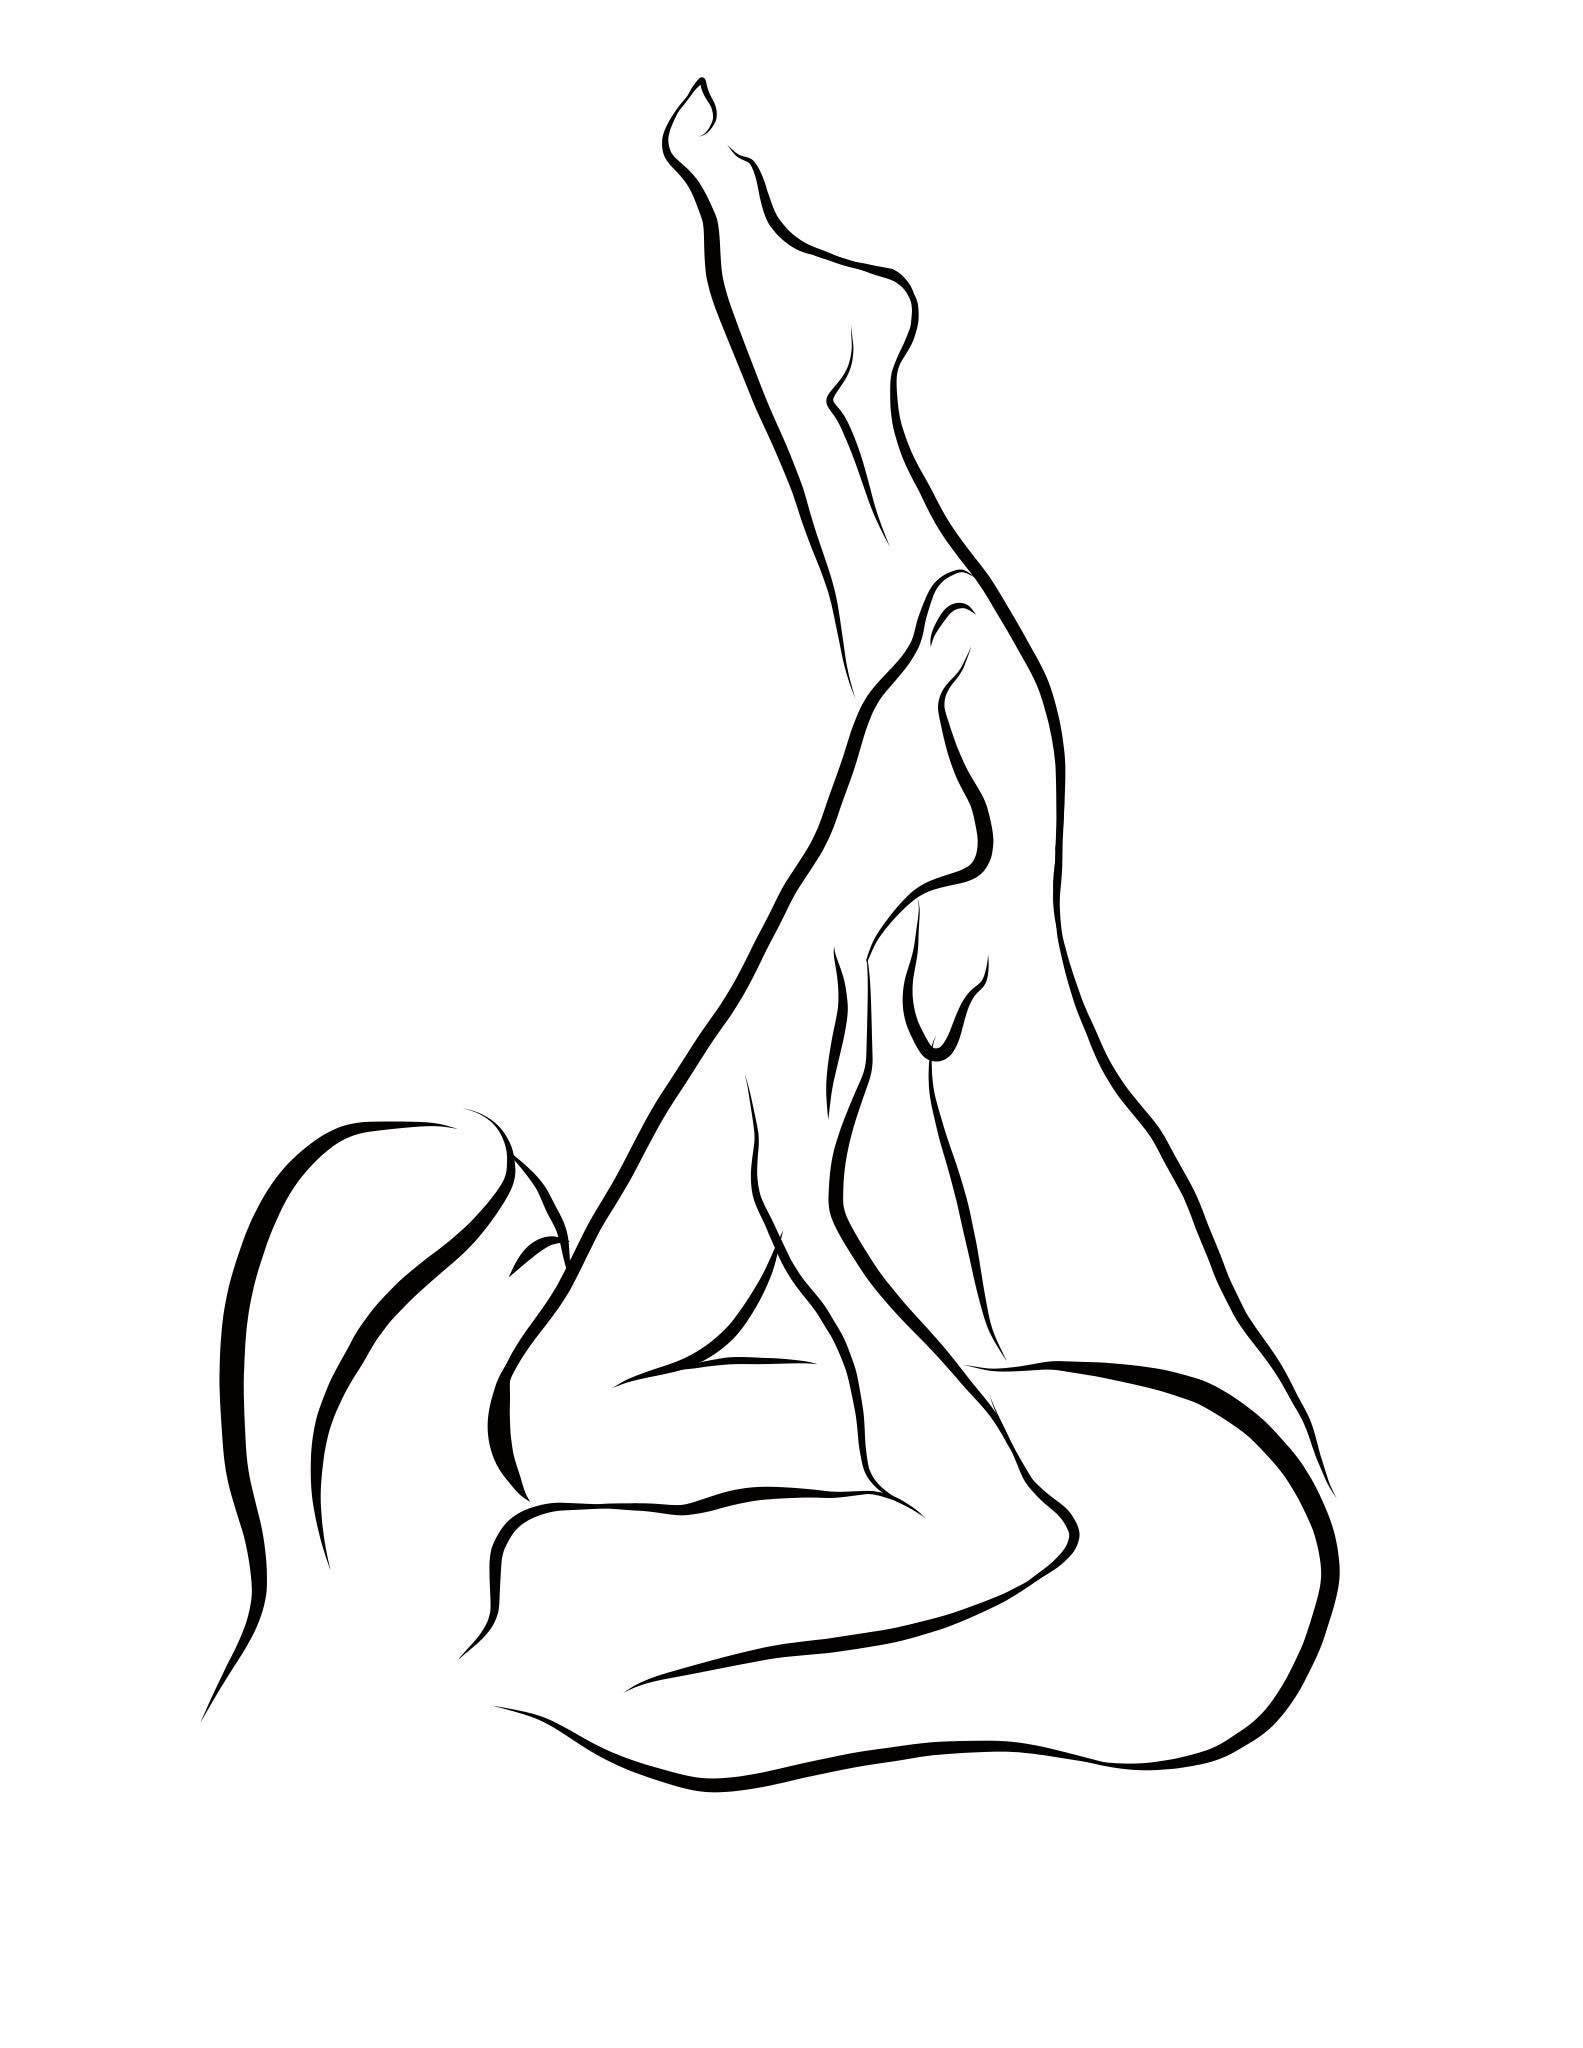 Haiku #42 - Digital Vector Drawing Female Nude Woman Figure On Back Stretching